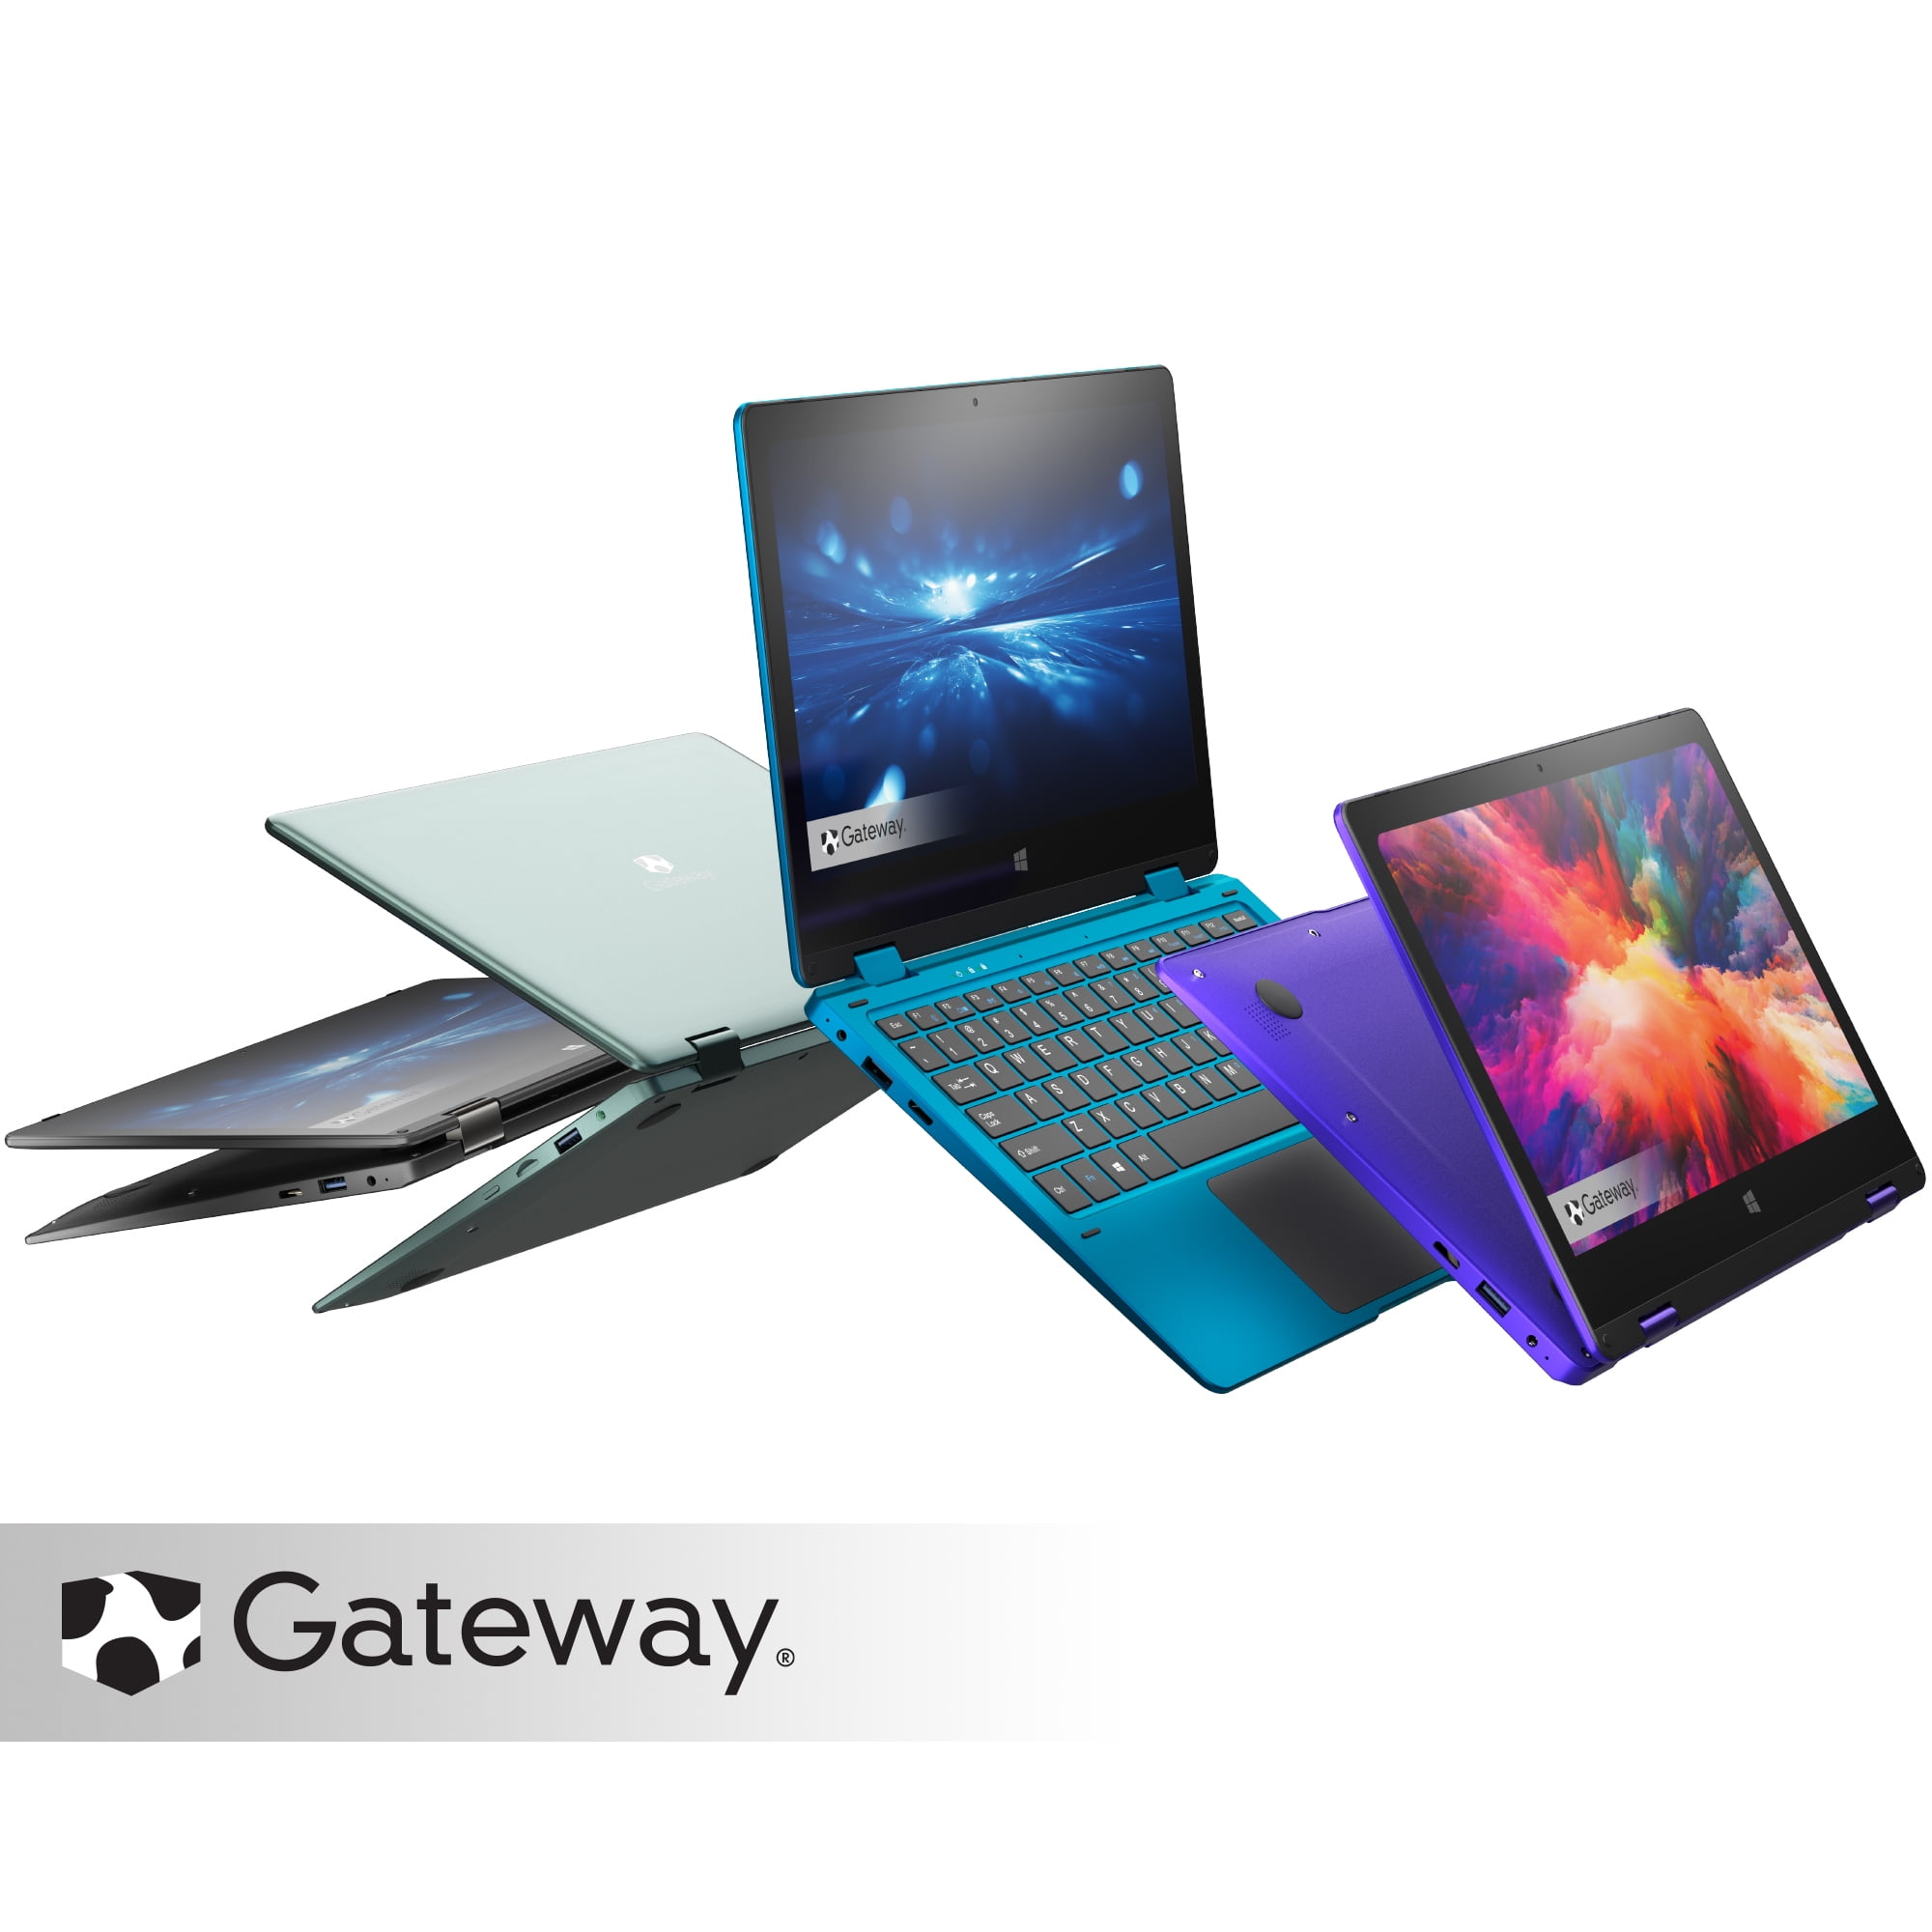 Gateway Notebook 11.6″ Touchscreen 2-in-1s Laptop, Intel Celeron N4020, 4GB RAM, 64GB HD, Windows 10 Home, Blue, GWTC116-2BL